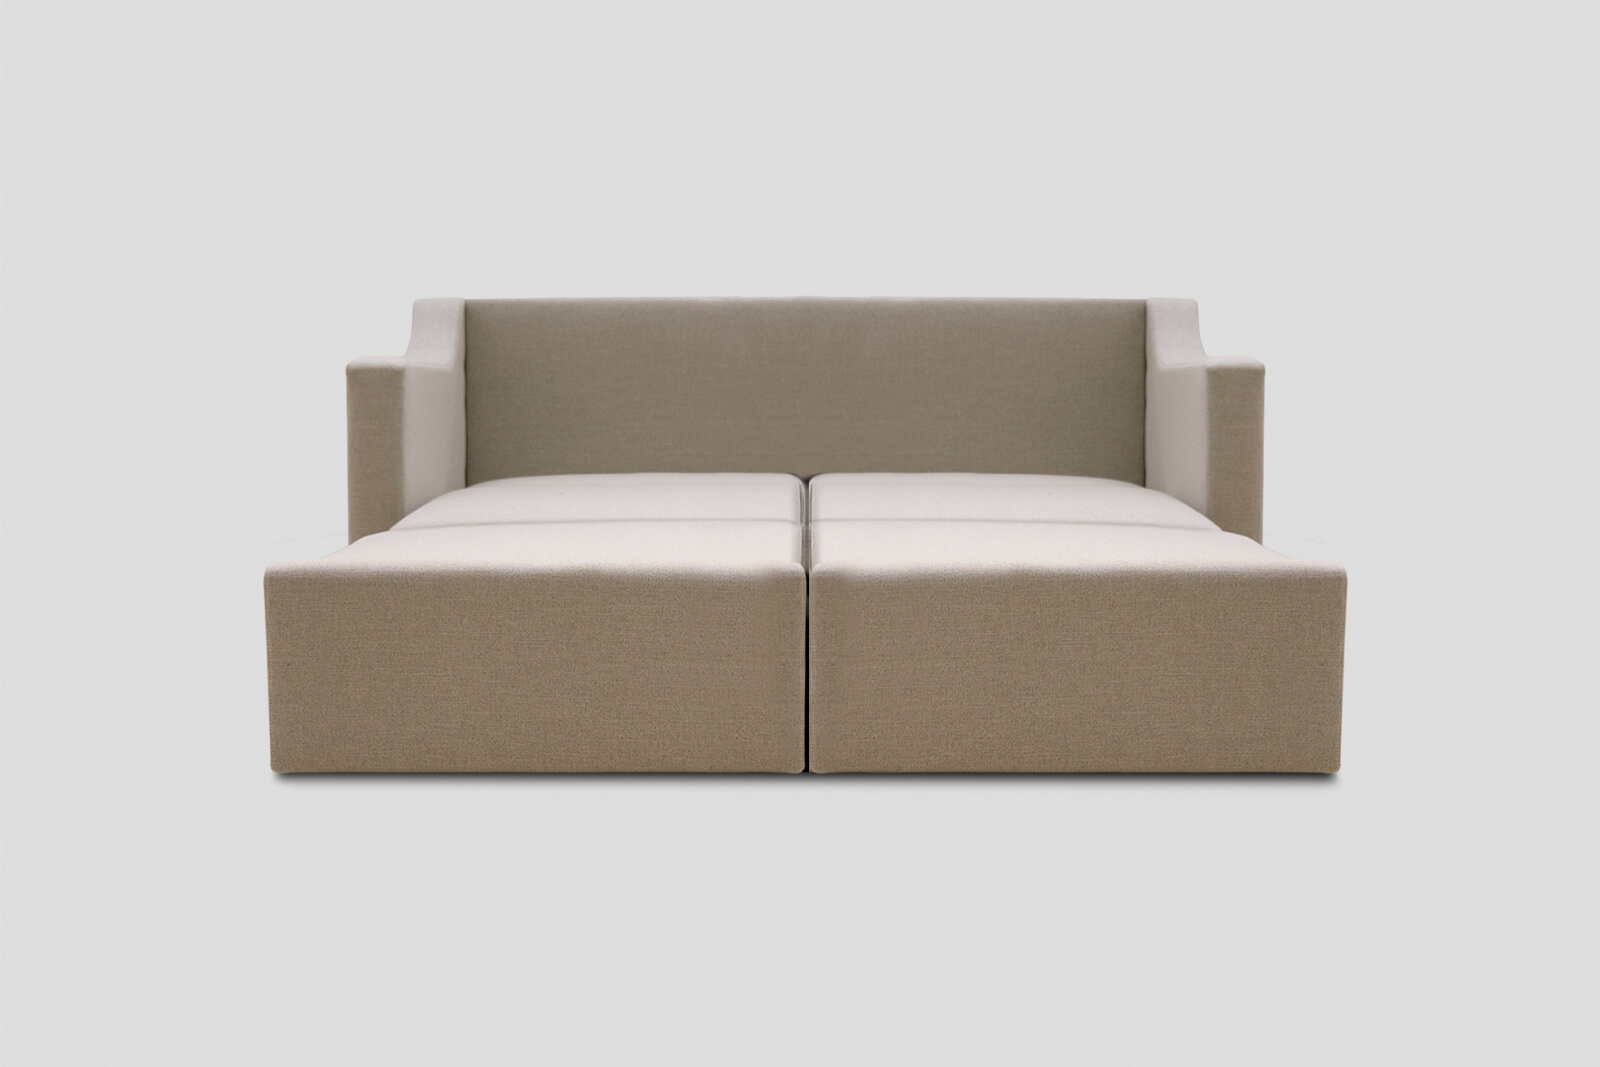 HBSB02-kingsize-sofa-bed-coconut-bed-front